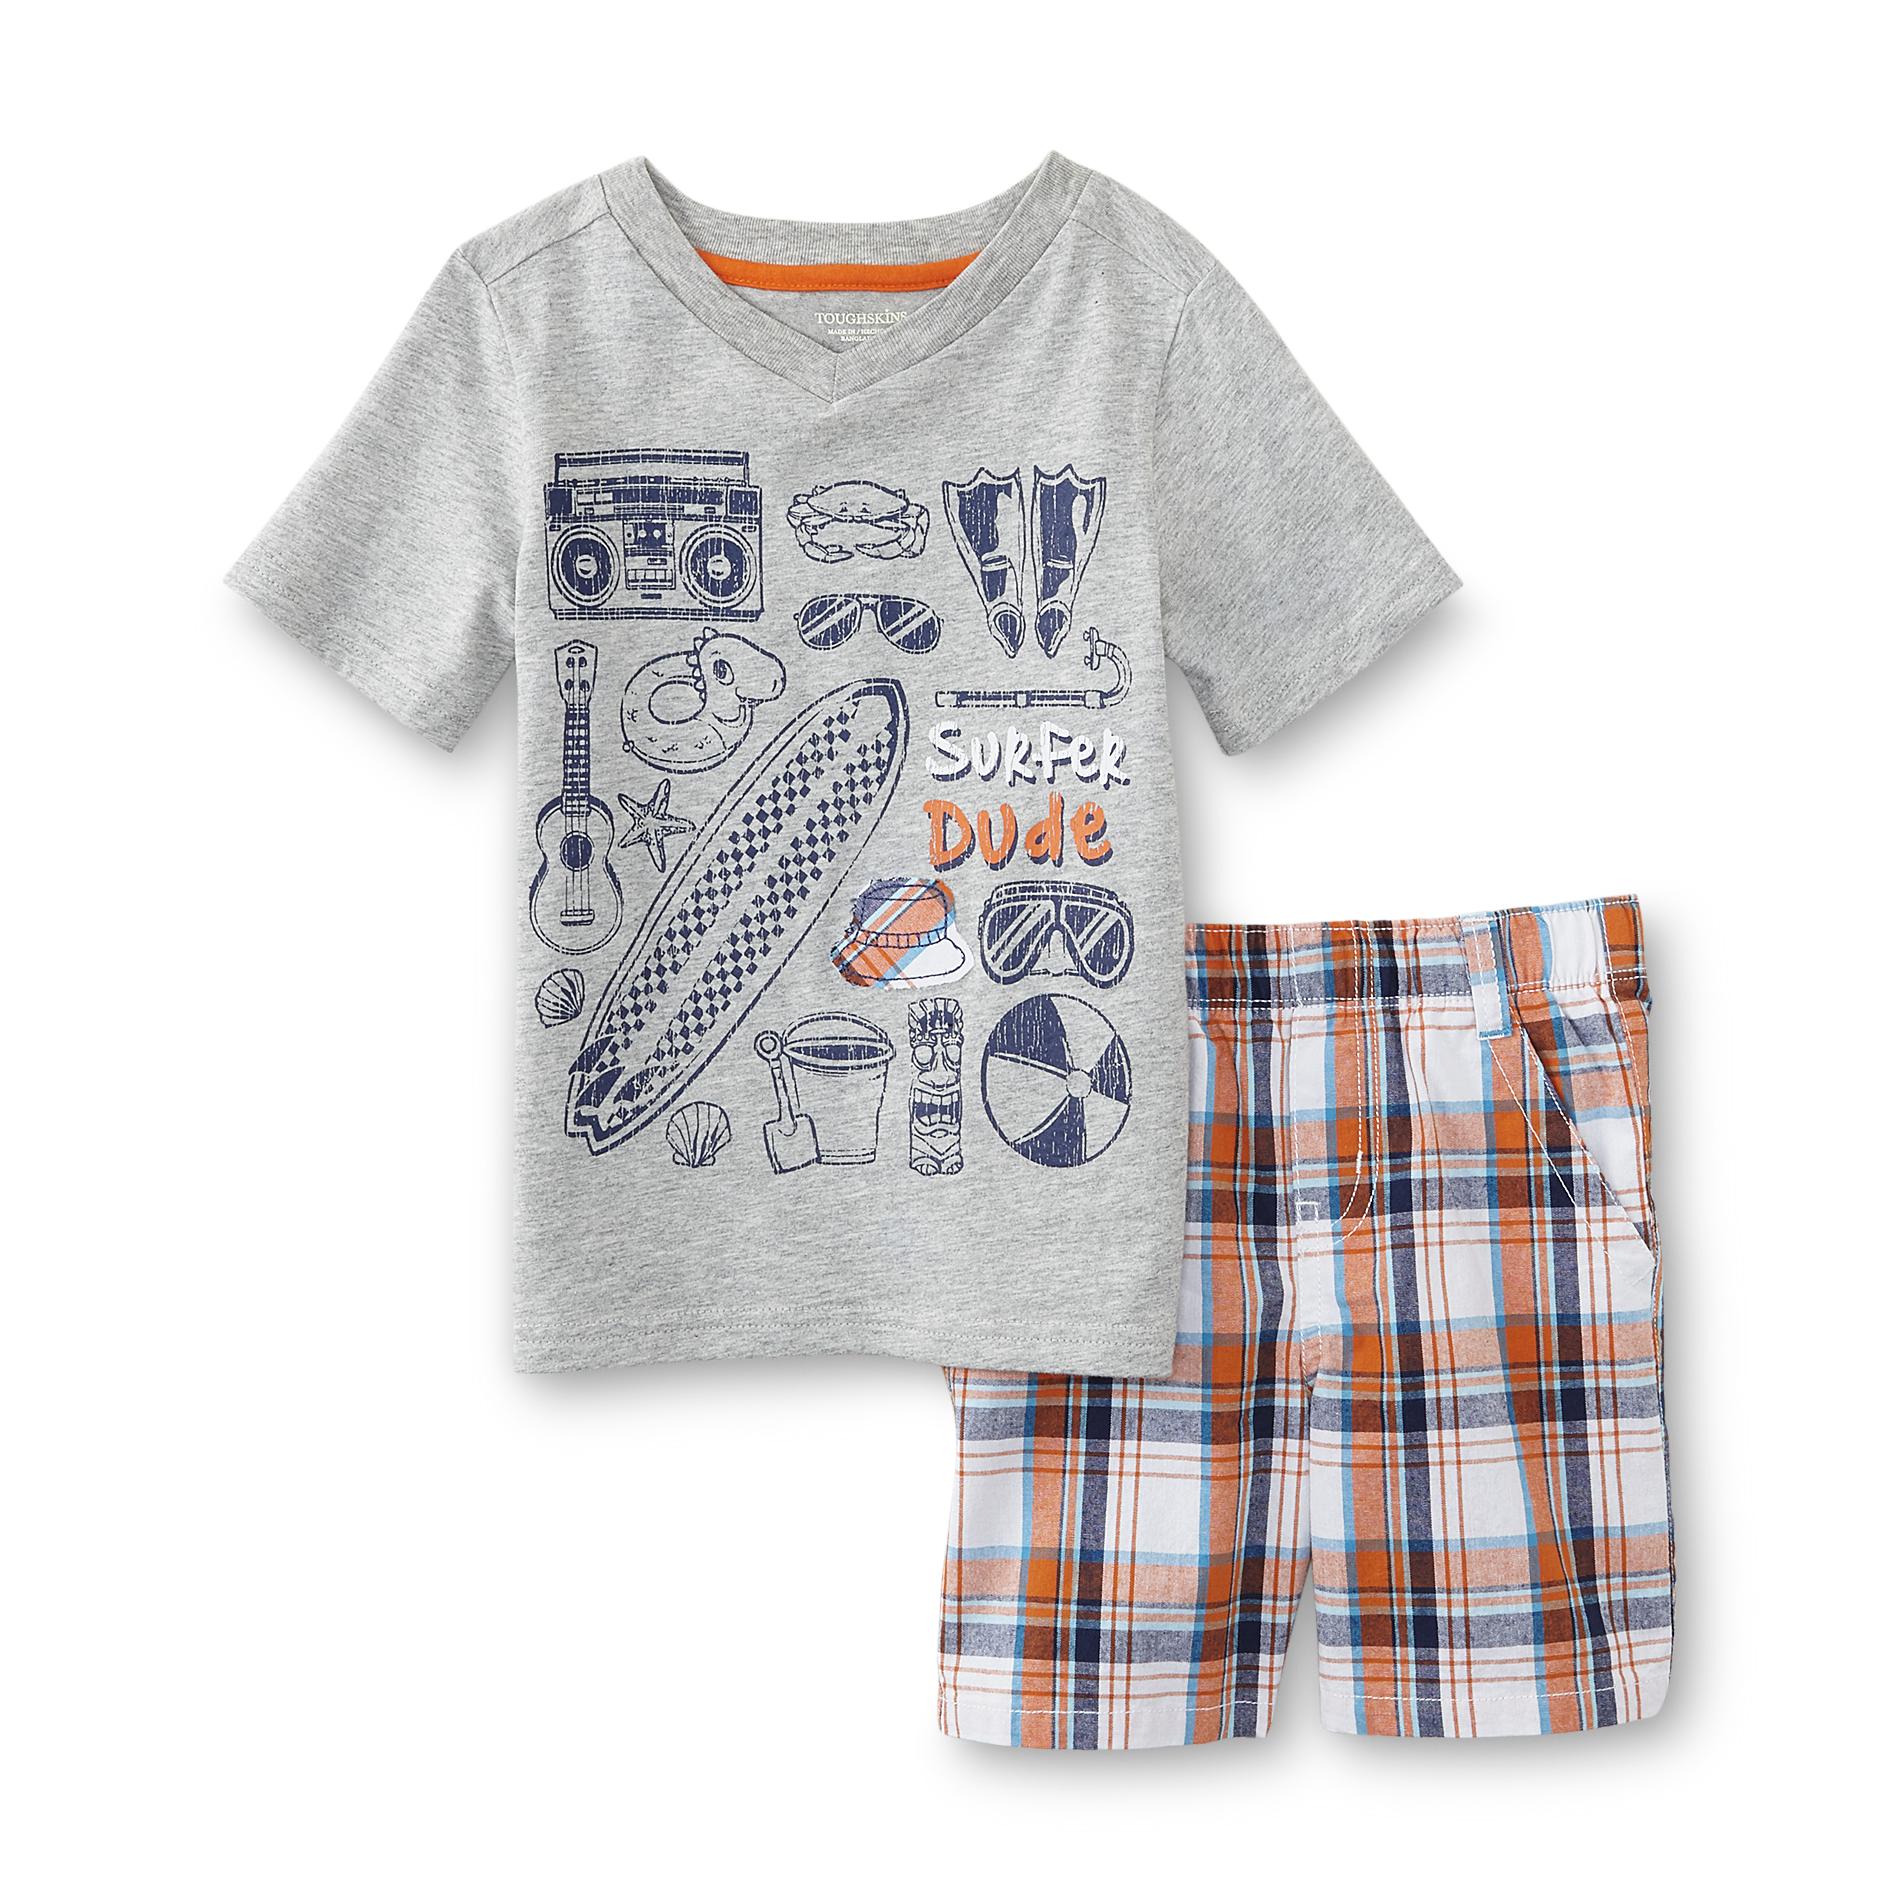 Toughskins Infant & Toddler Boy's T-Shirt & Shorts - Plaid